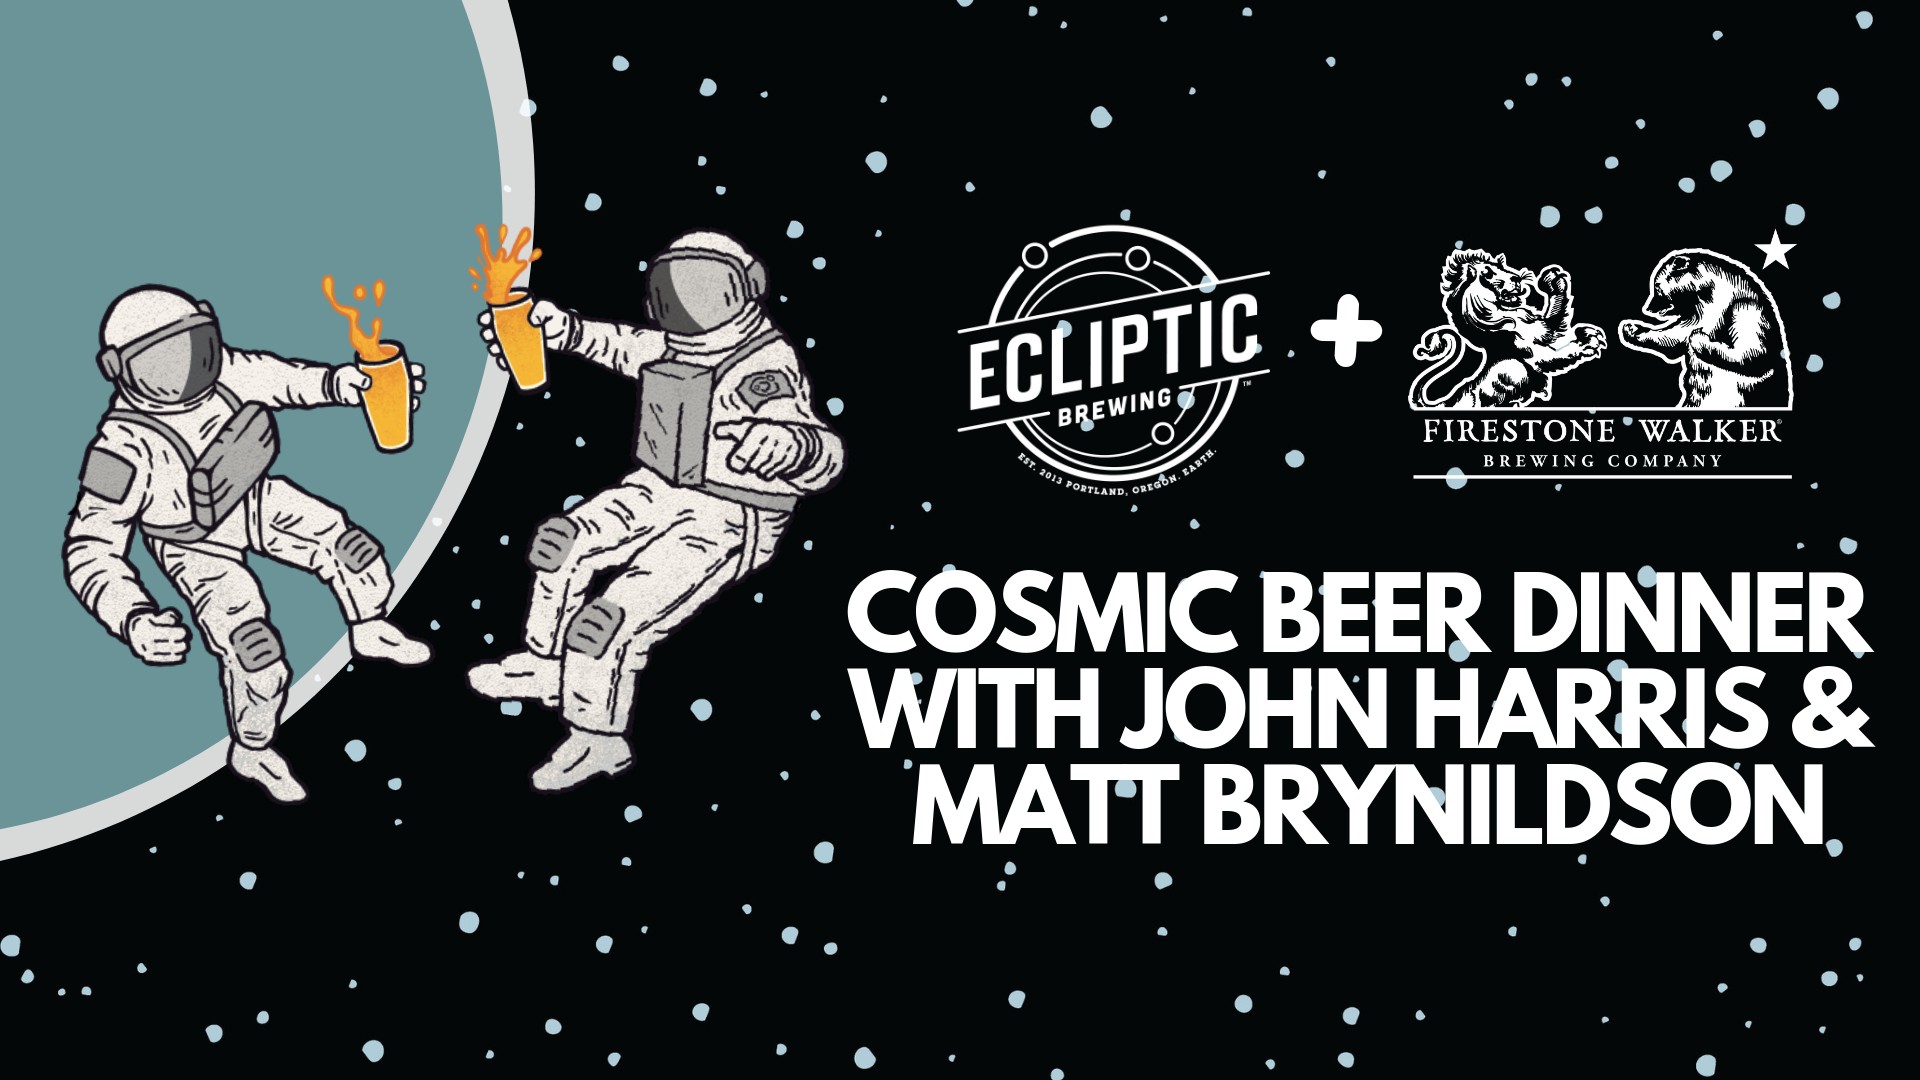 Ecliptic Cosmic Beer Dinner with John Harris and Matt Brynildson of Firestone Walker